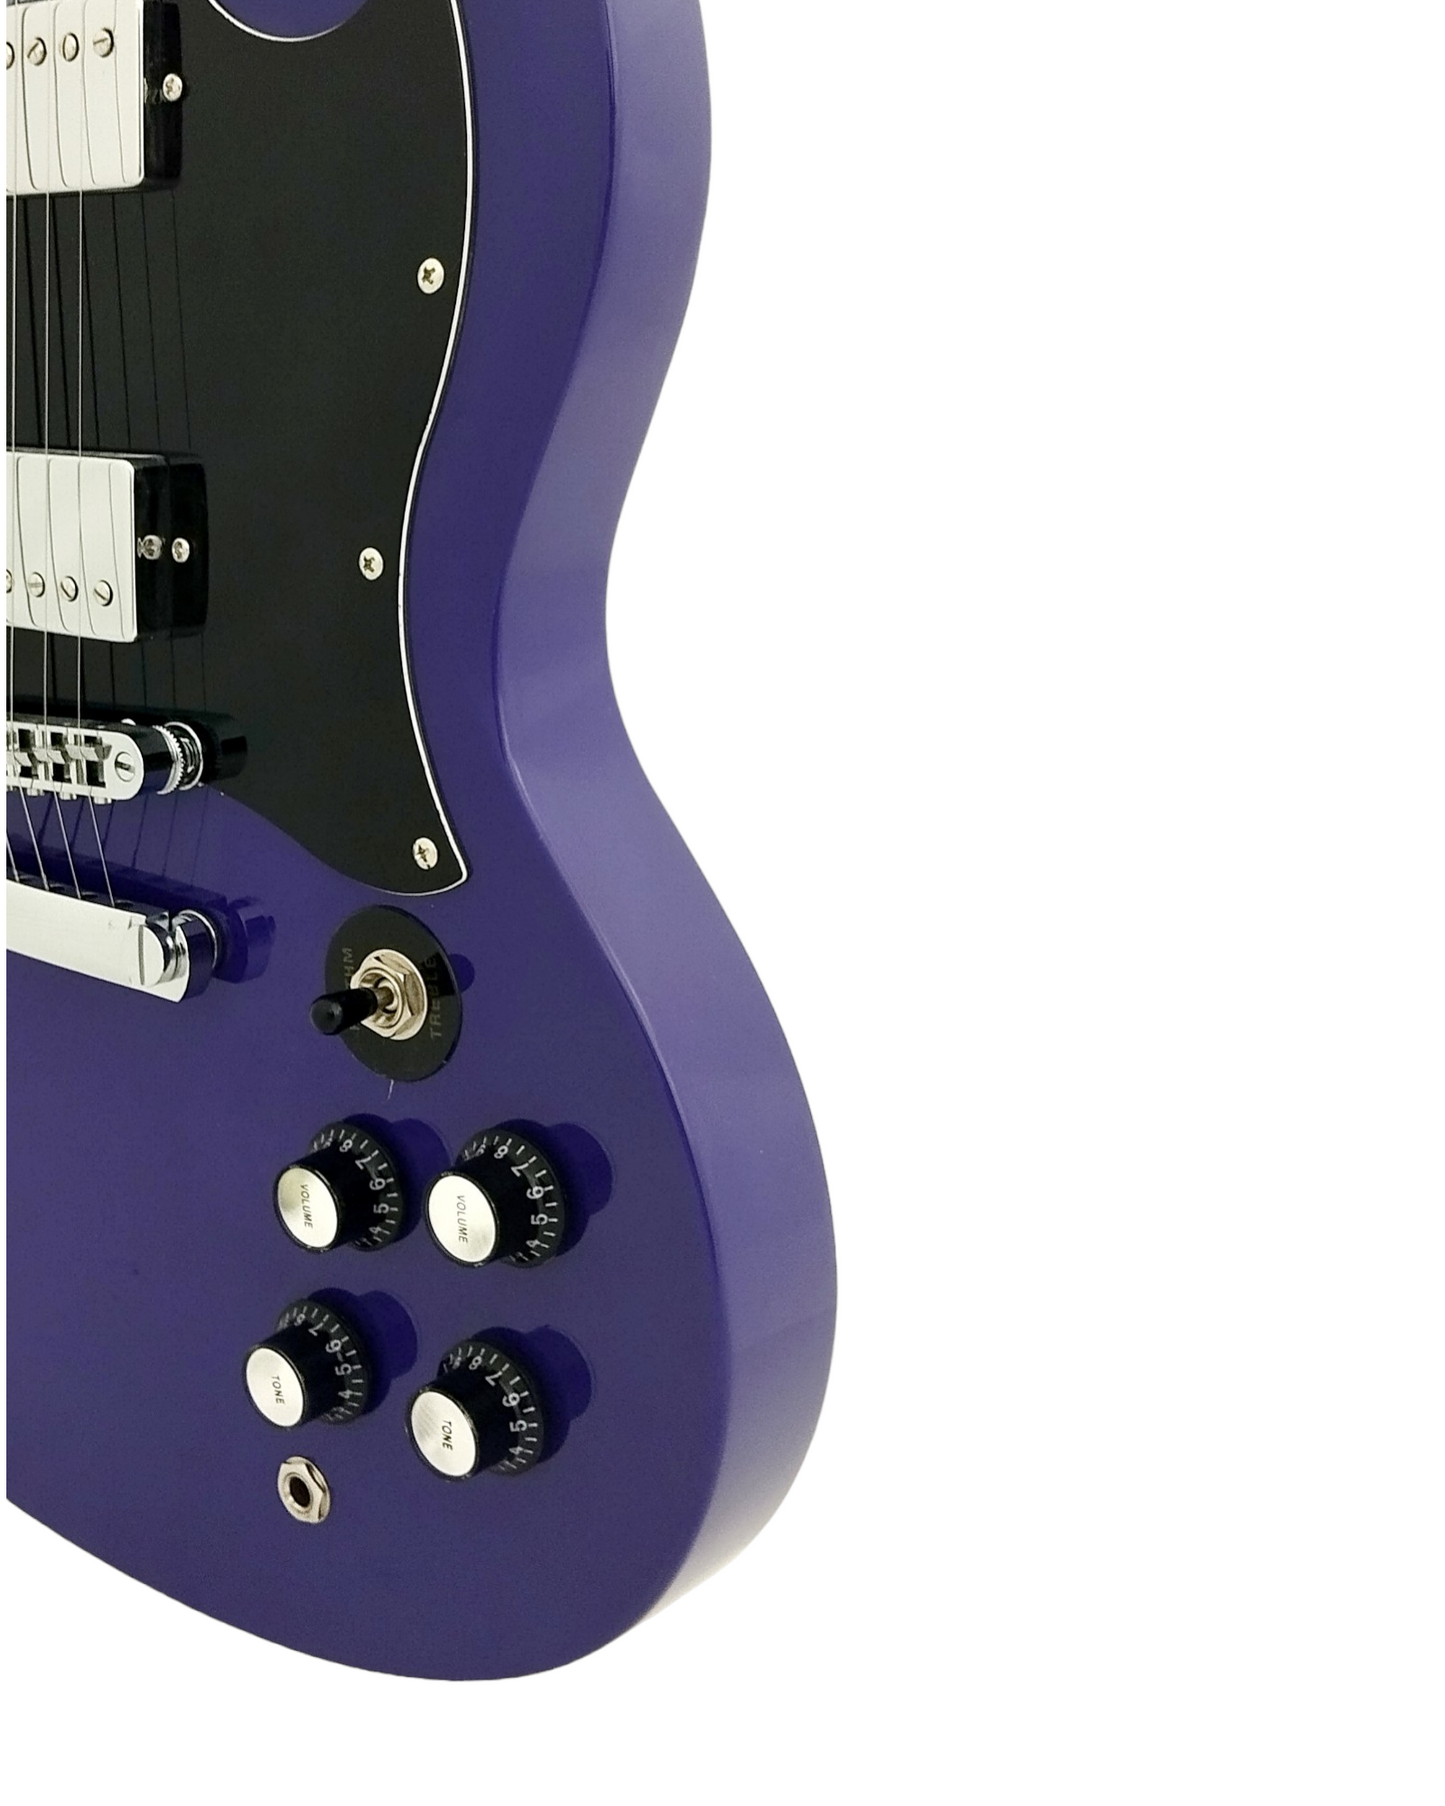 Haze Maple Neck Abalone & Mother-of-Pearl Inlay HSG Electric Guitar - Purple SEG271PU